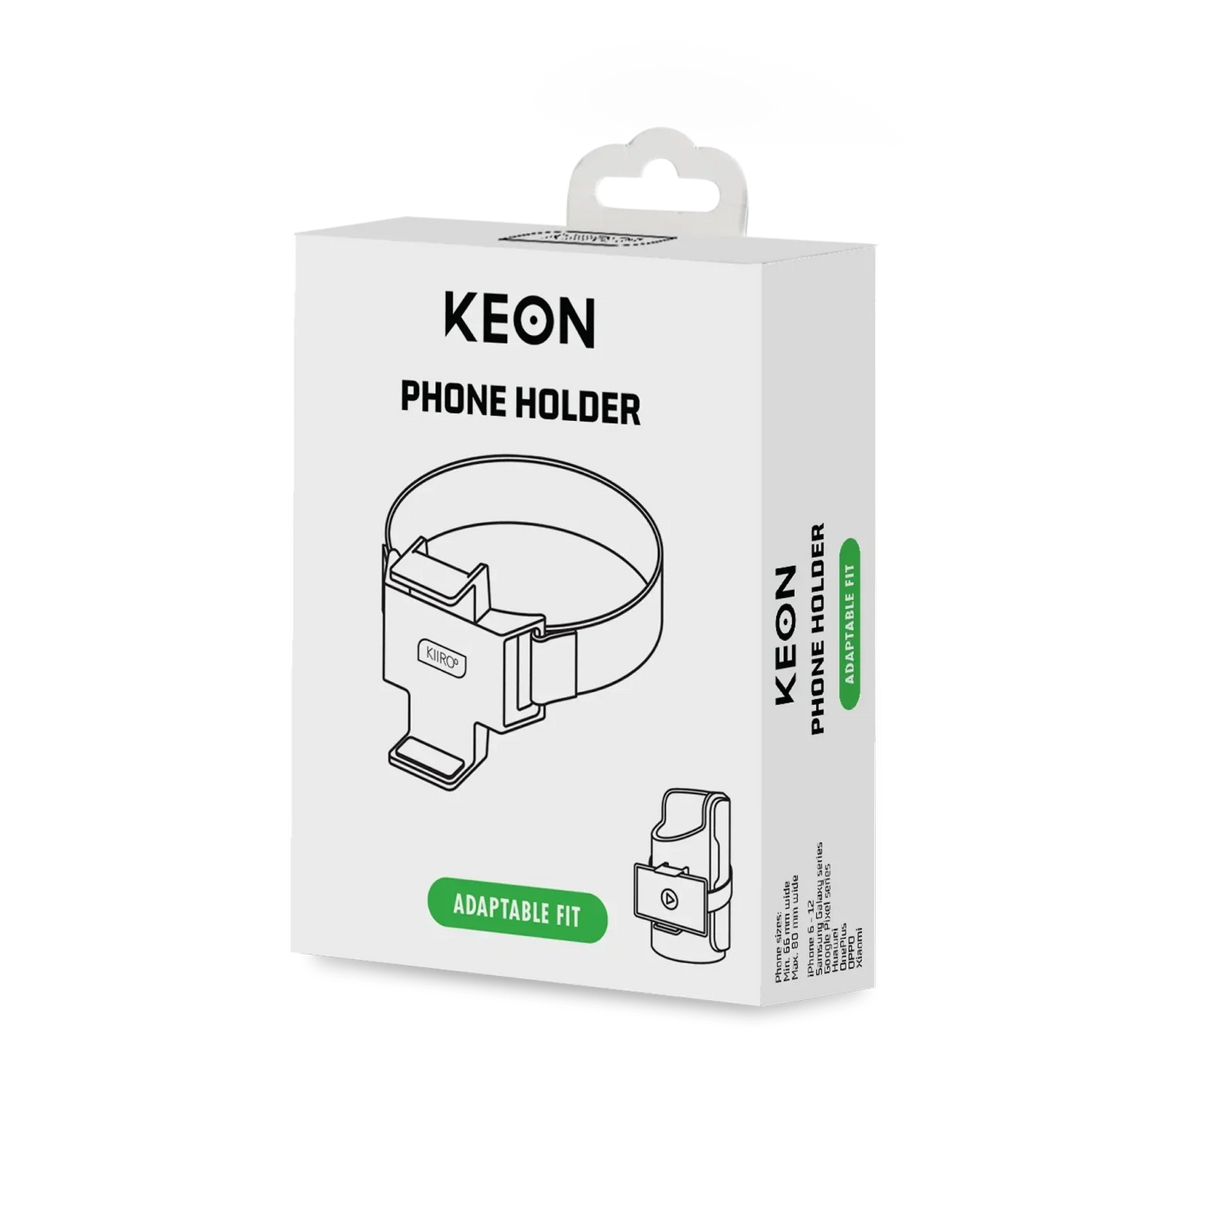 KIIROO Keon Phone Holder